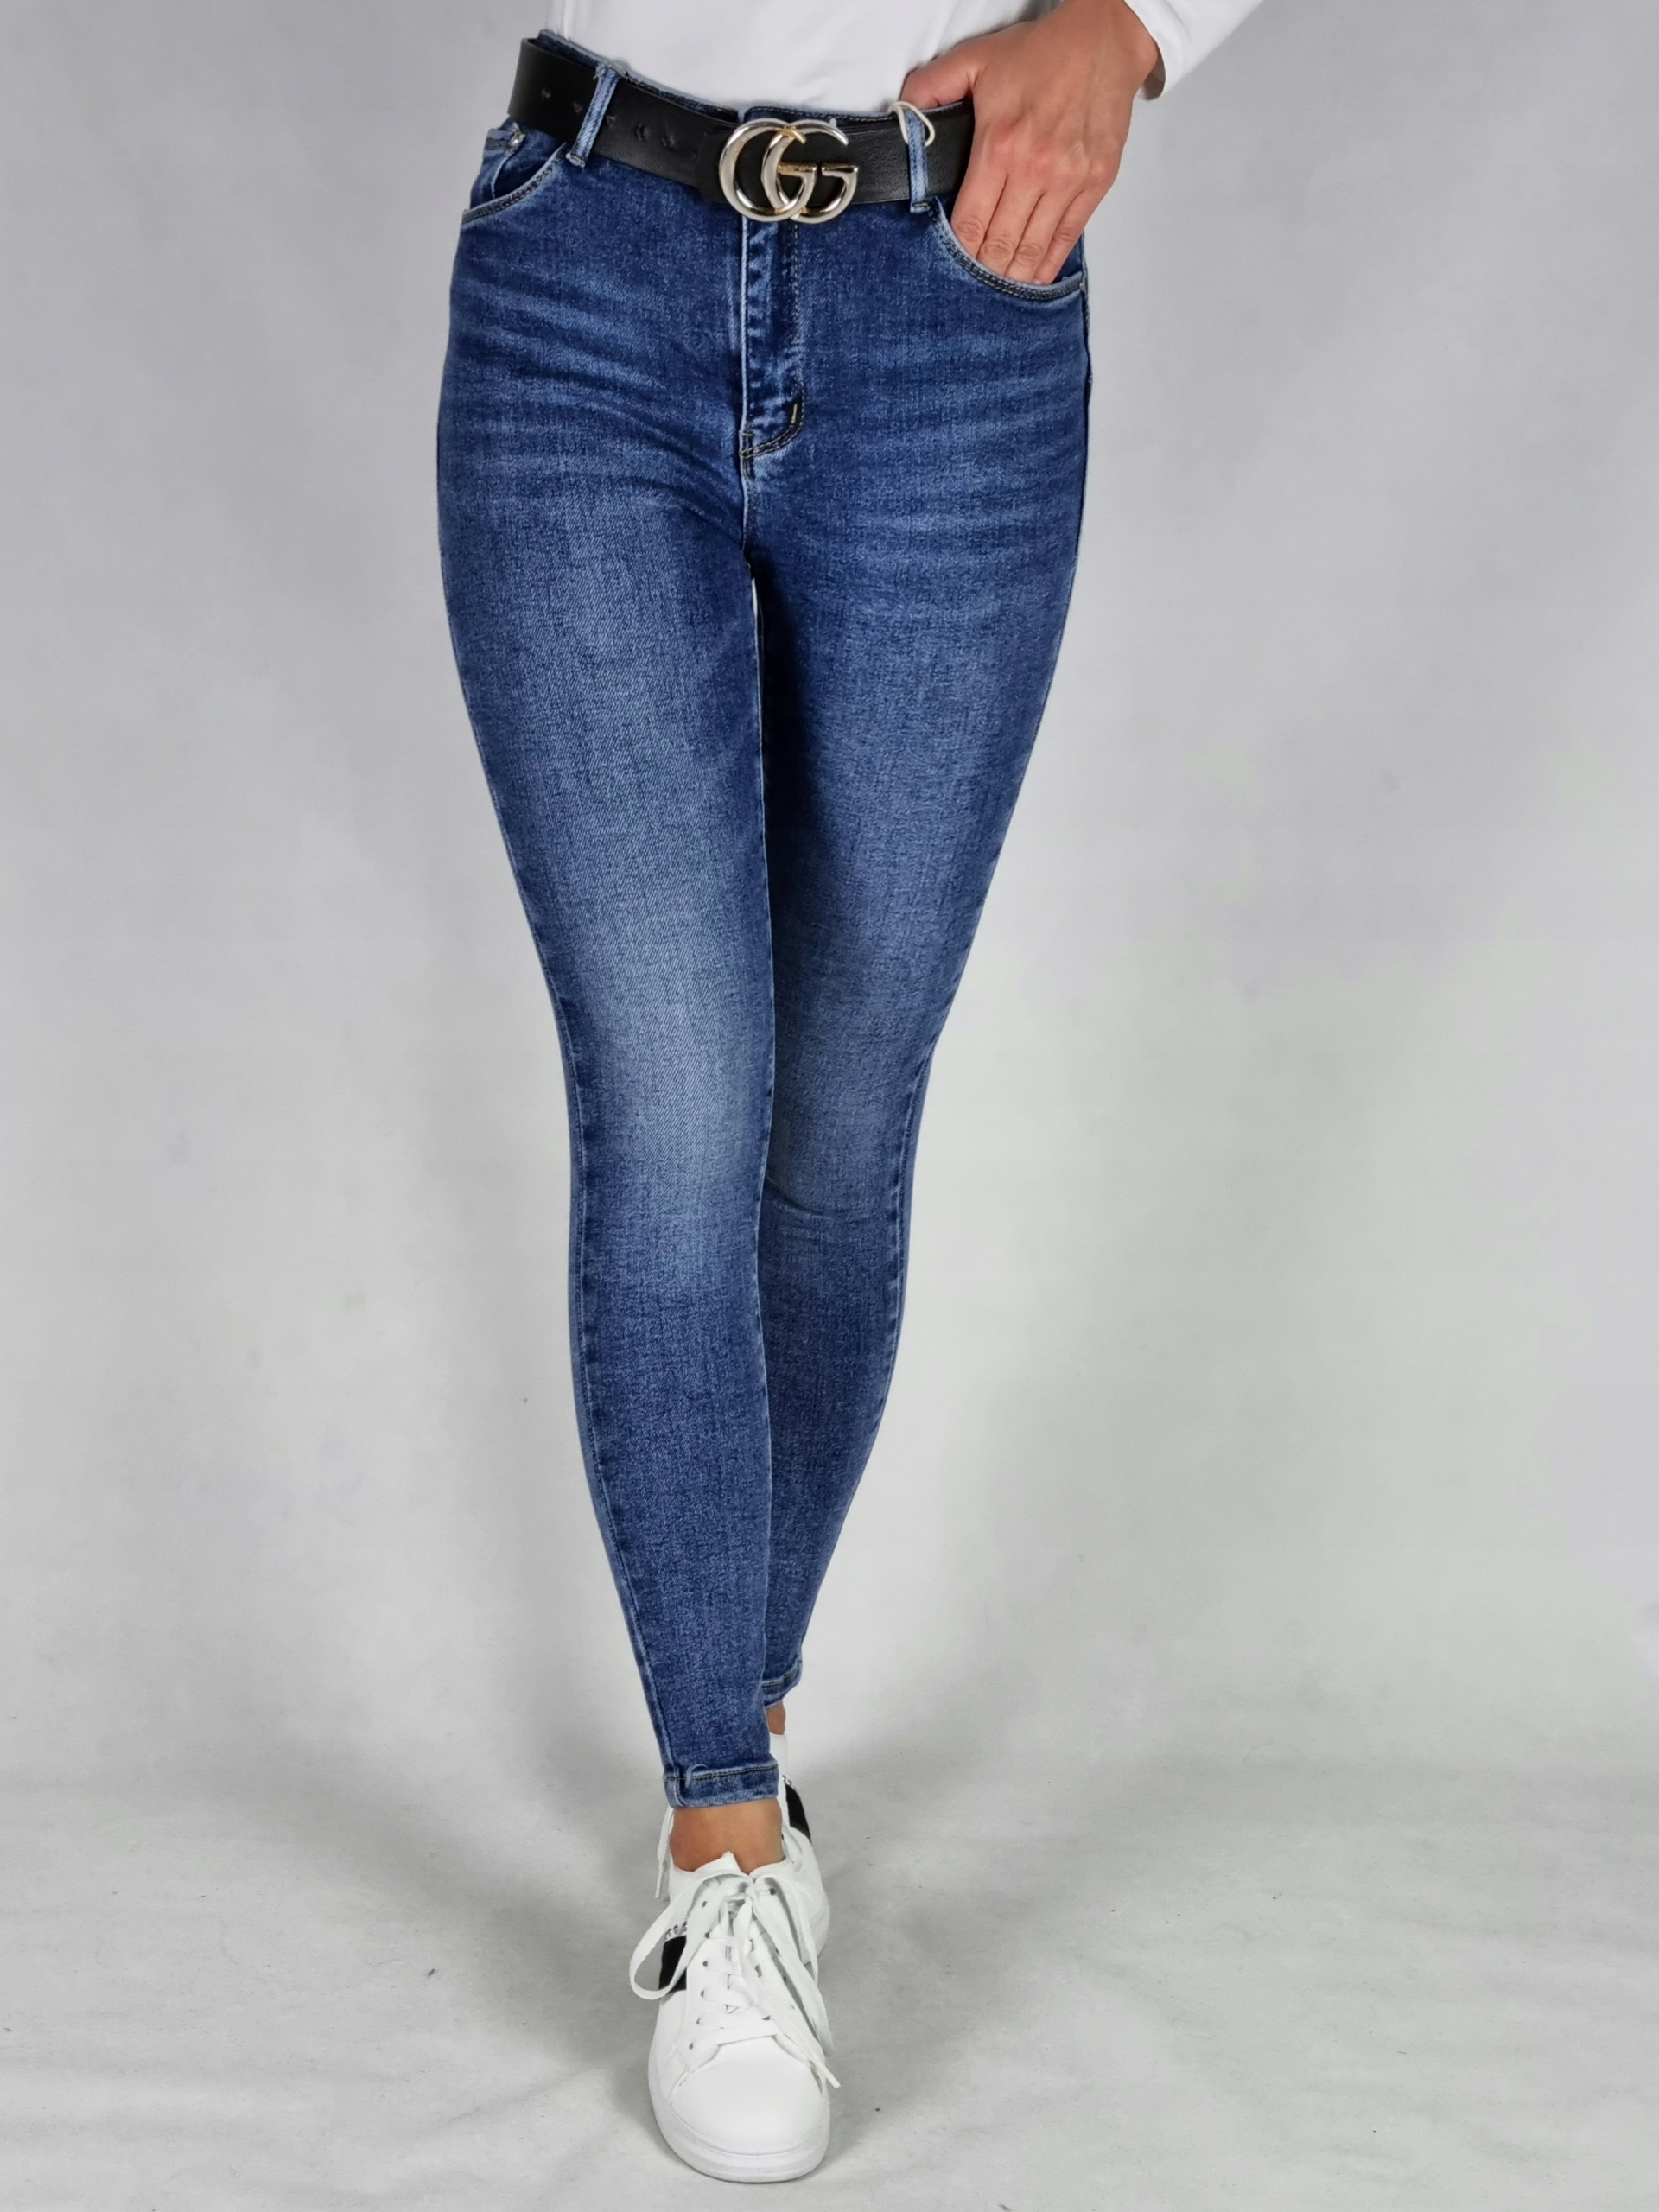 M. SARA классические джинсовые брюки размер 28 Midsection (Waist Height) high